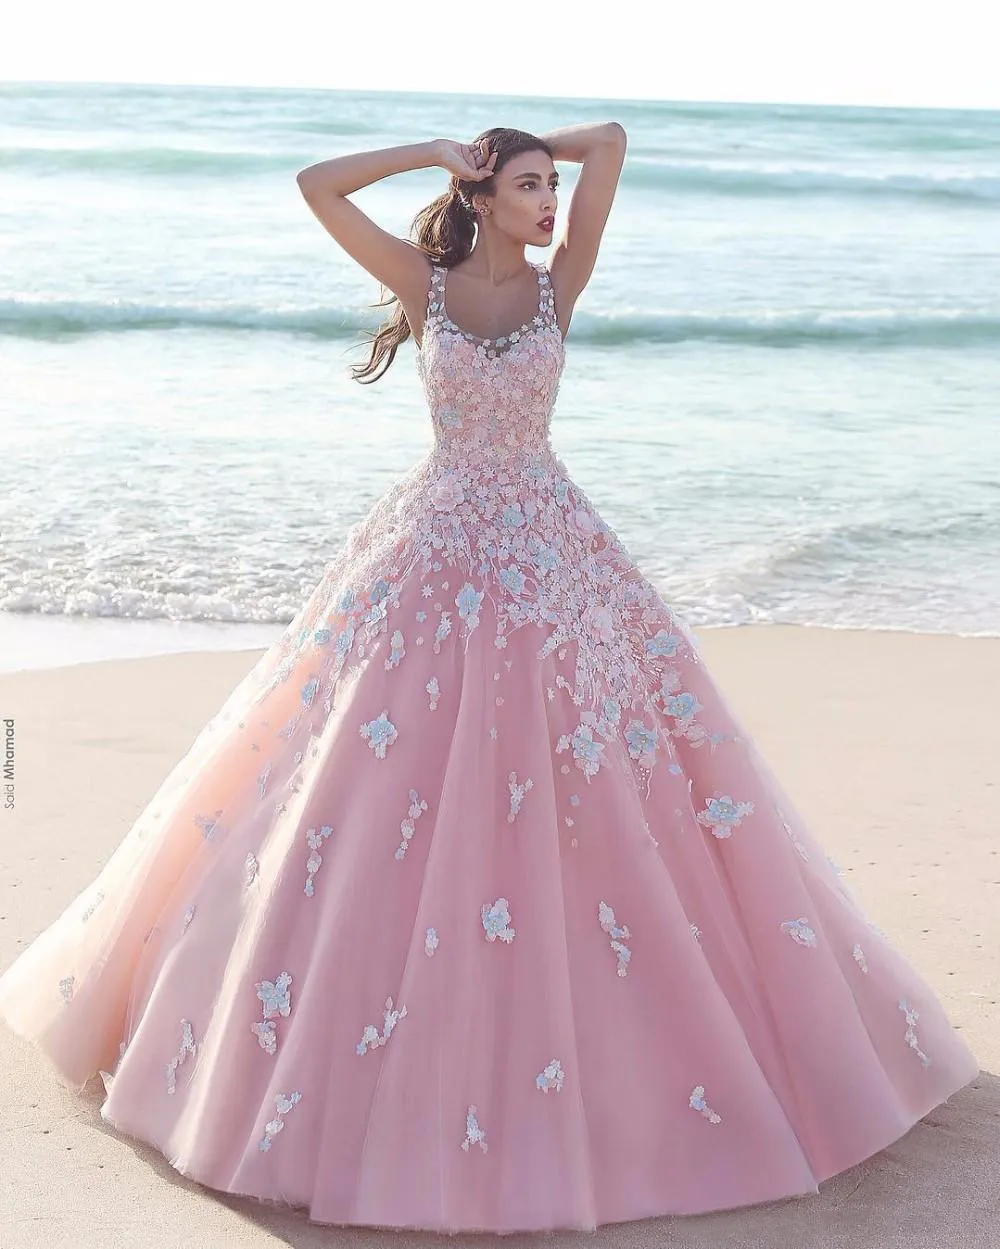 Prinzessin floral blume rosa kugelkleid quinceanera kleider 2021 applique tüll scoop sleeveless spitze mahlic long prom kleider formale party